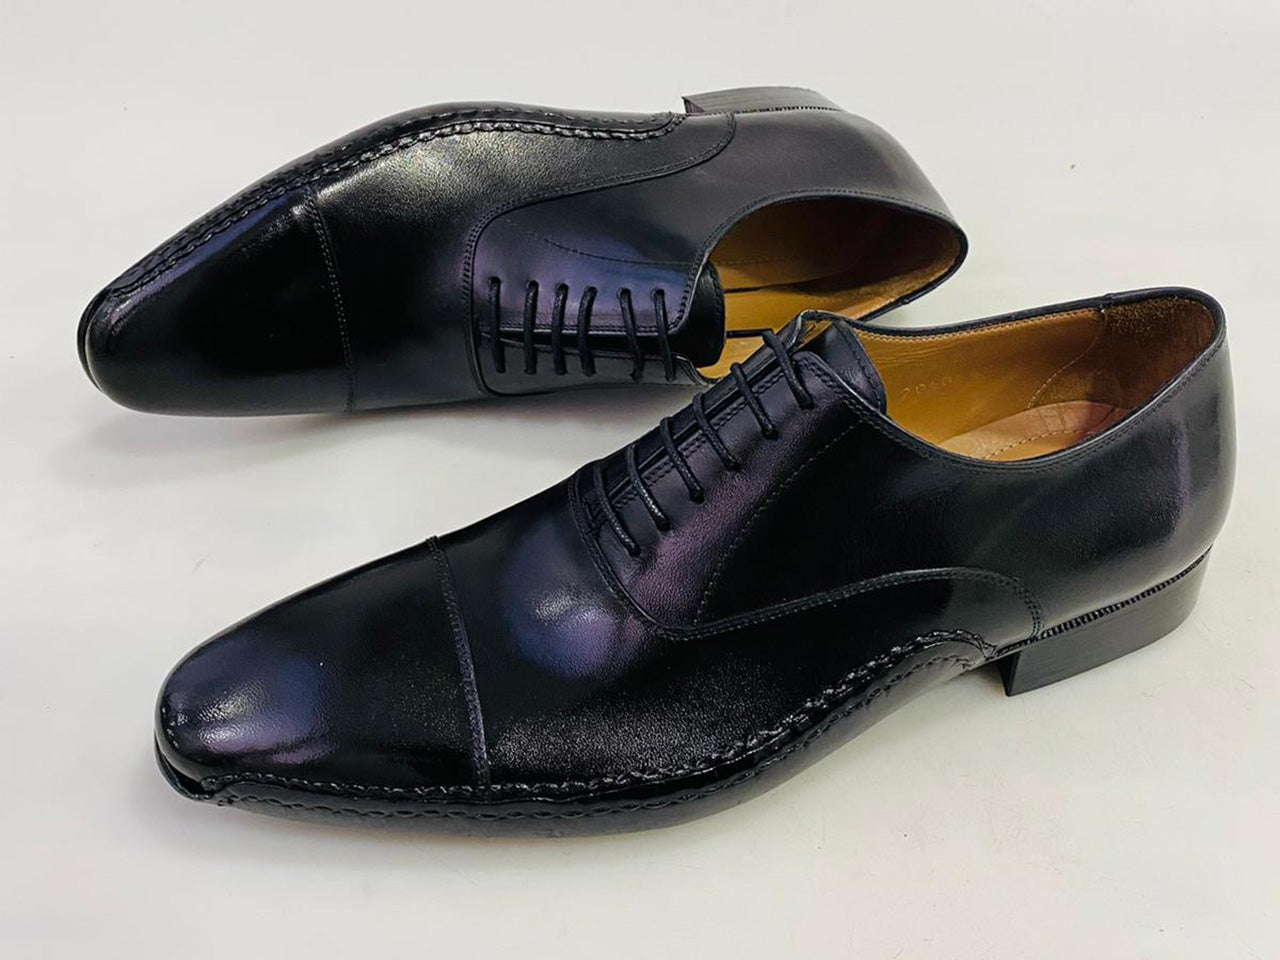 TucciPolo Mens Oxford Style Luxury Shoe - Side Handsewn Black Italian Calf Skin Leather Upper Dress Shoe